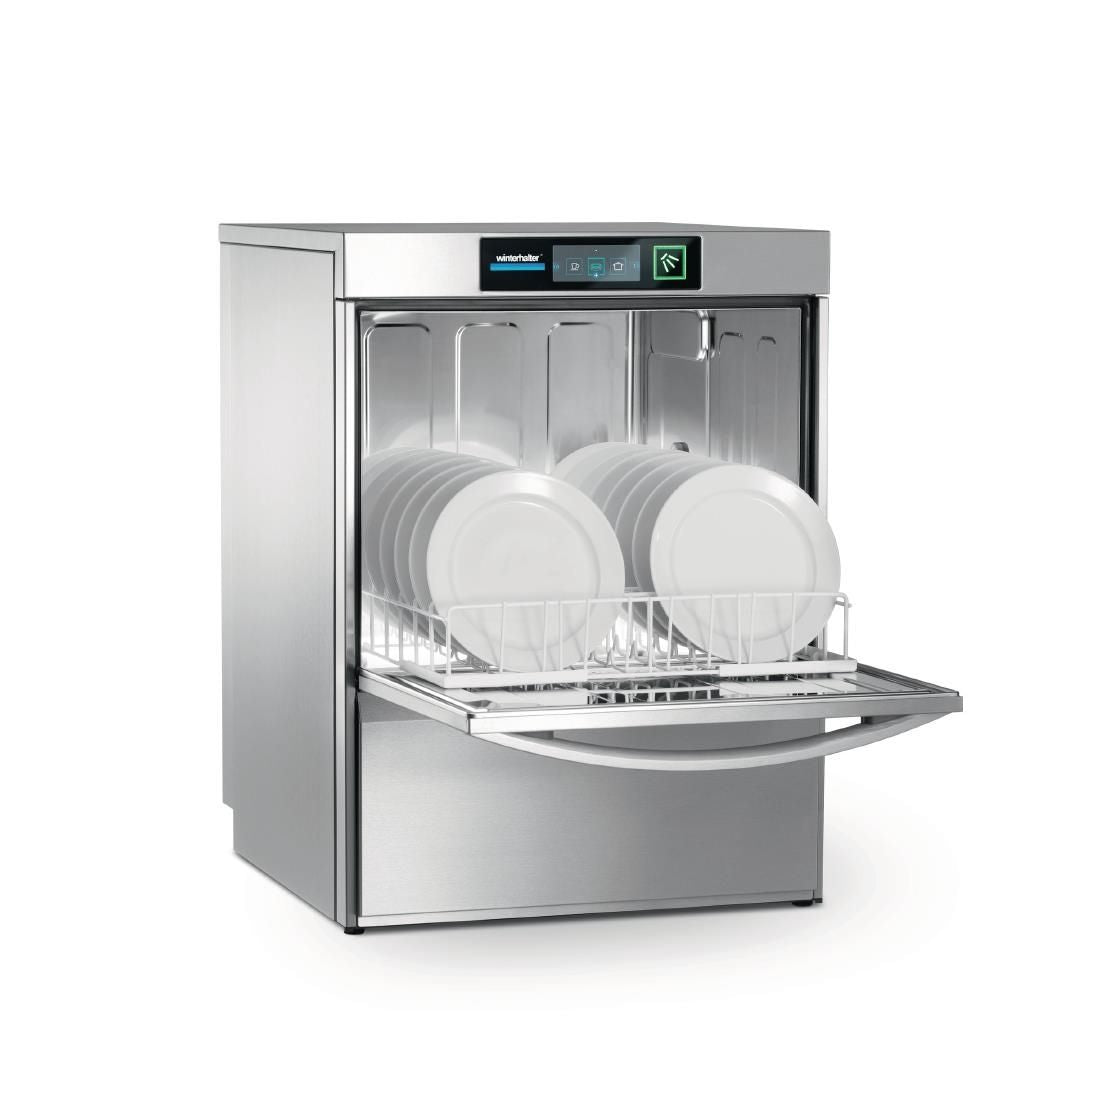 DE644 Winterhalter Undercounter Dishwasher UC-L JD Catering Equipment Solutions Ltd